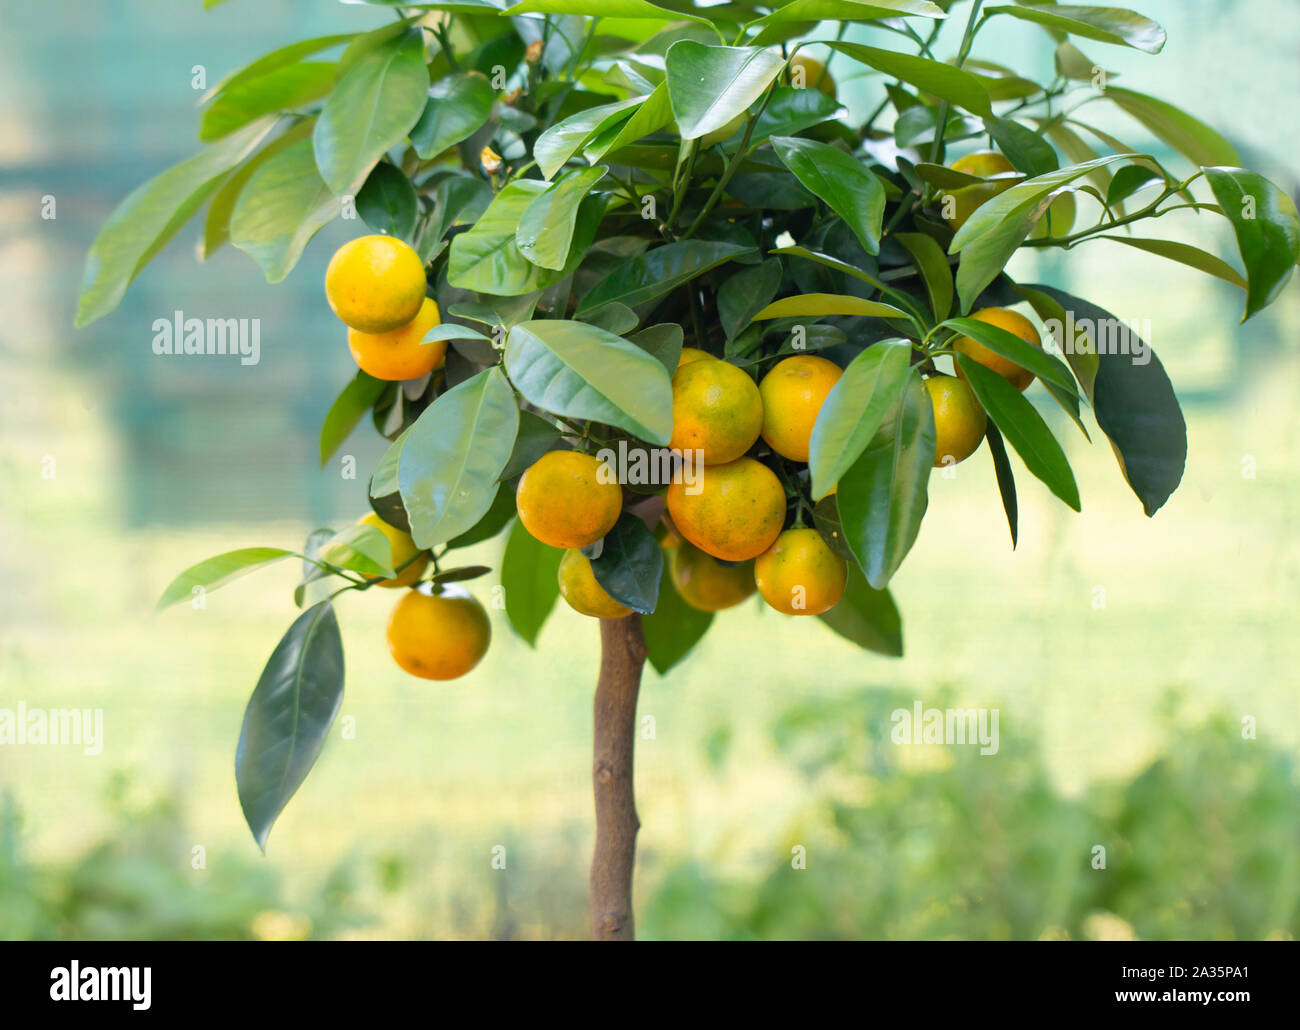 calamondin tree with ripe calamondin fruit Stock Photo